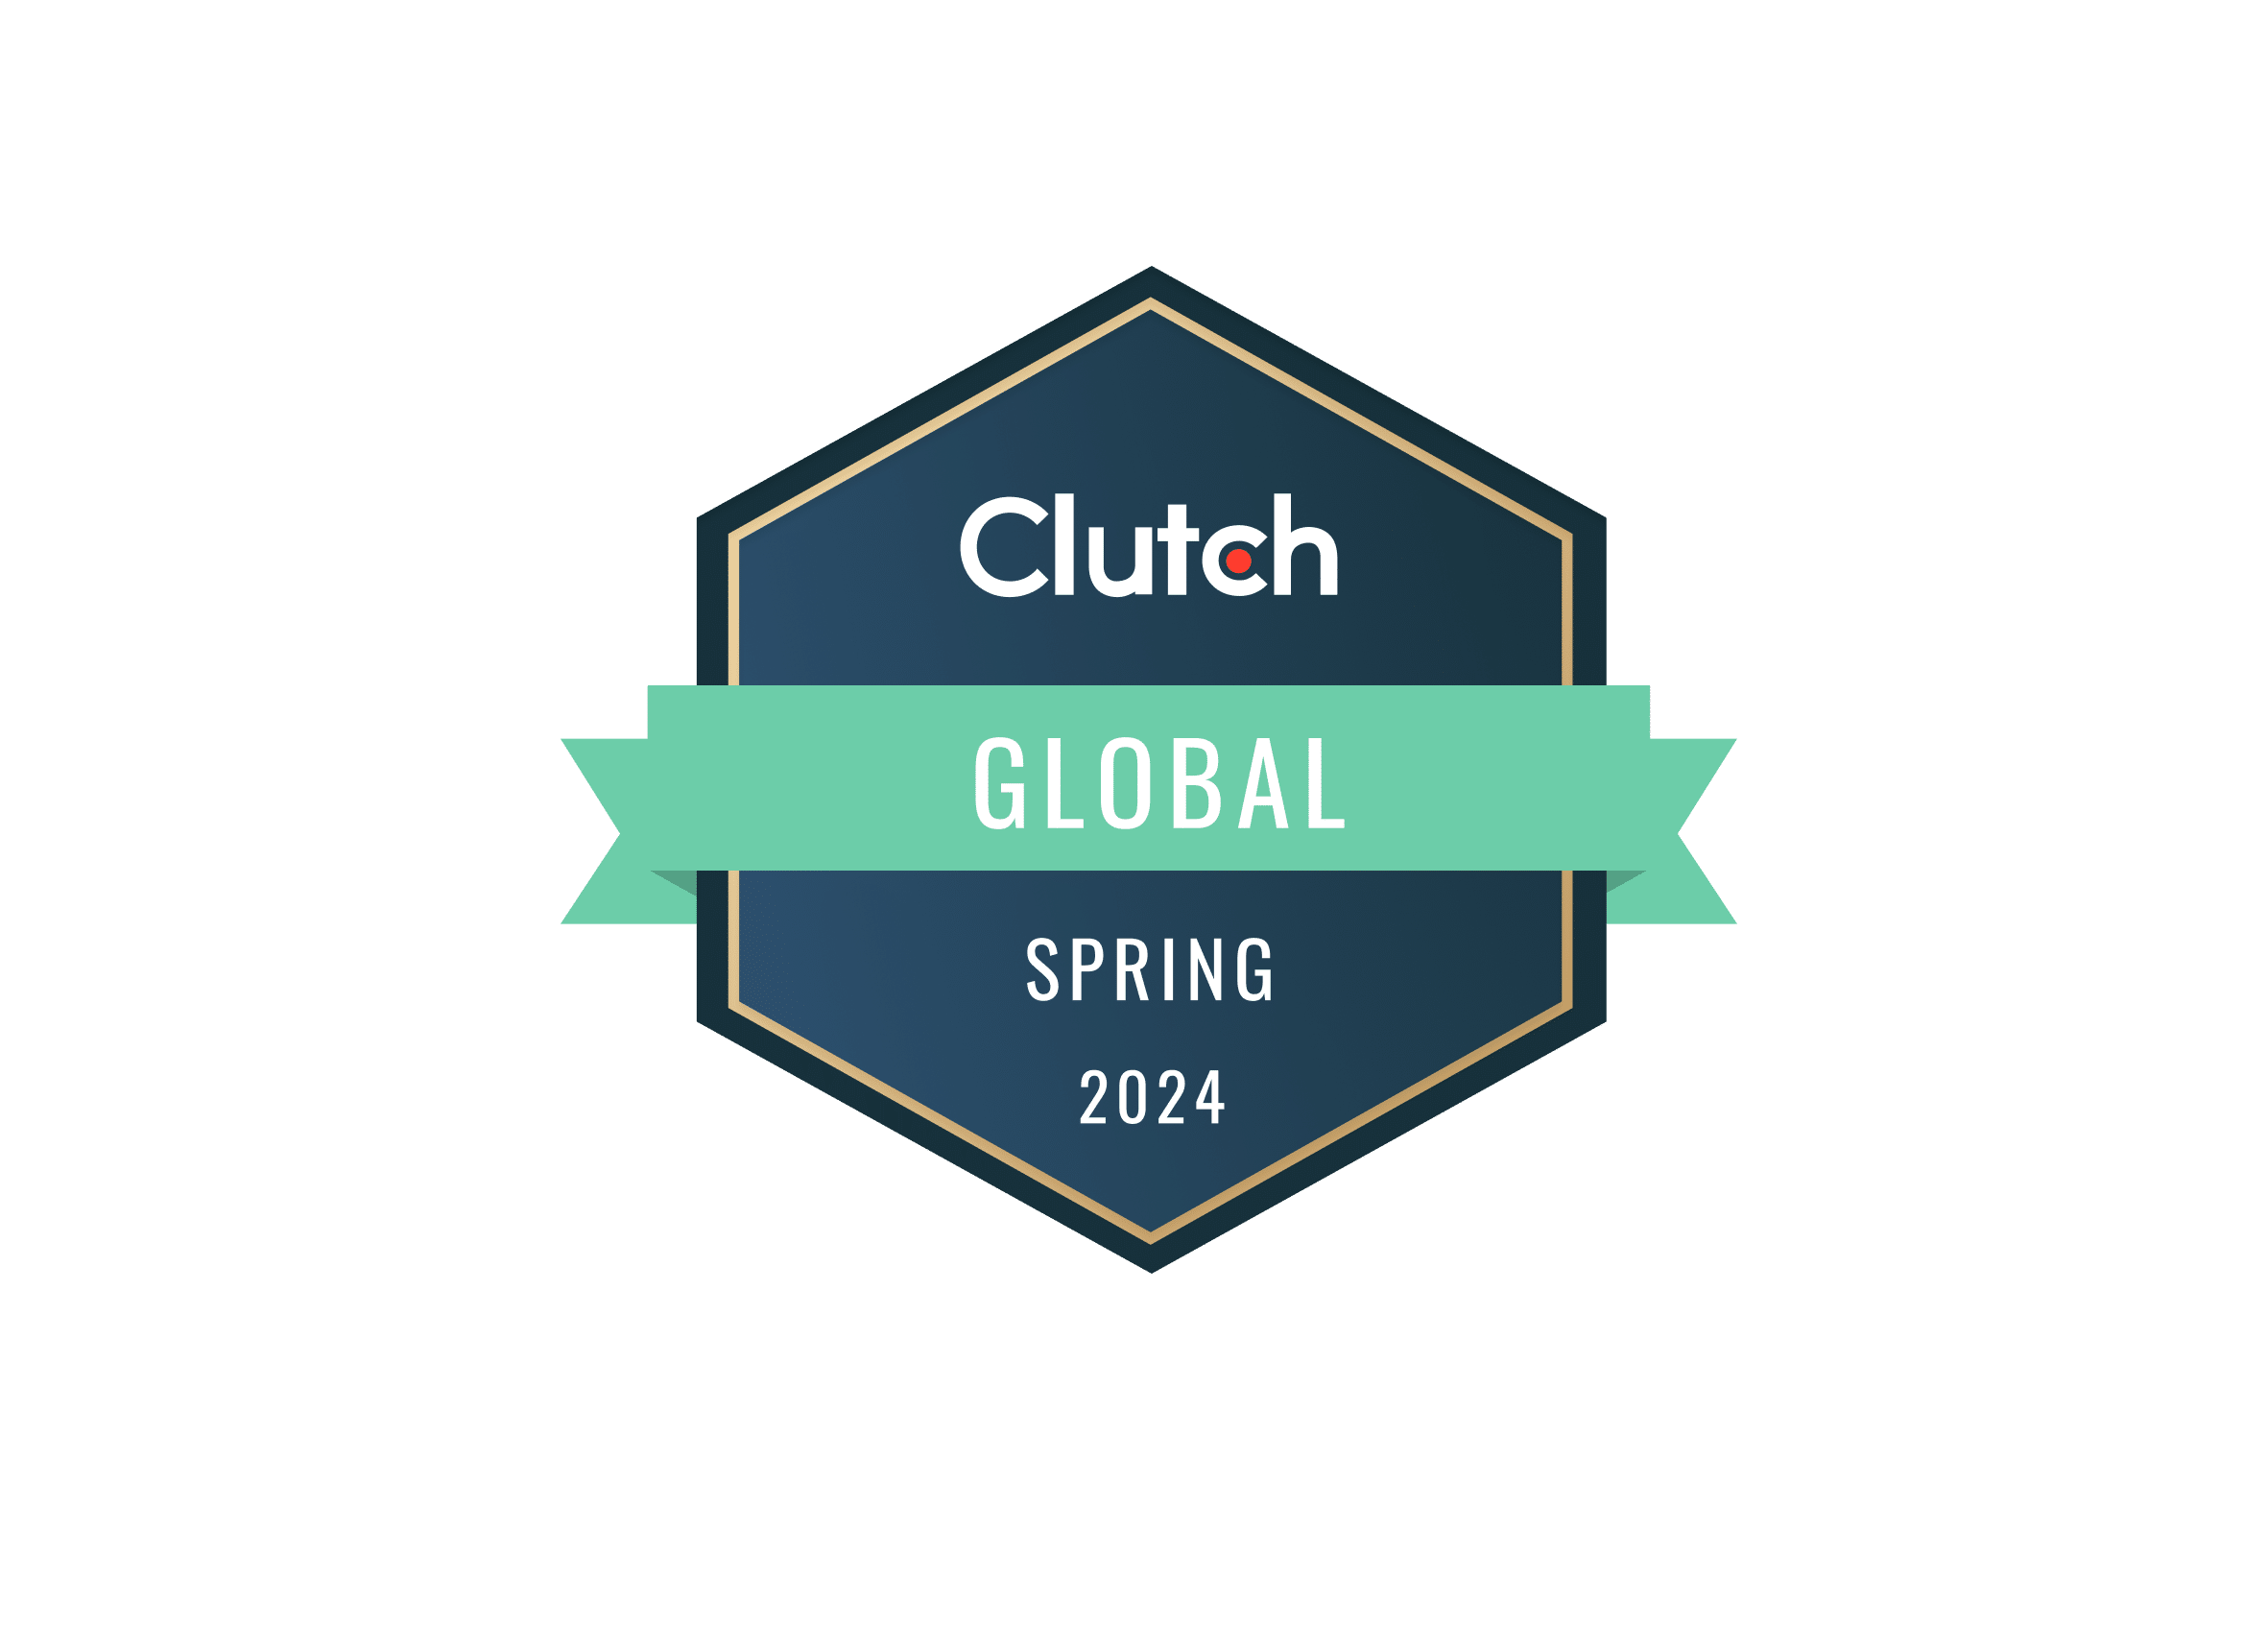 Clutch global spring 2024 award badge